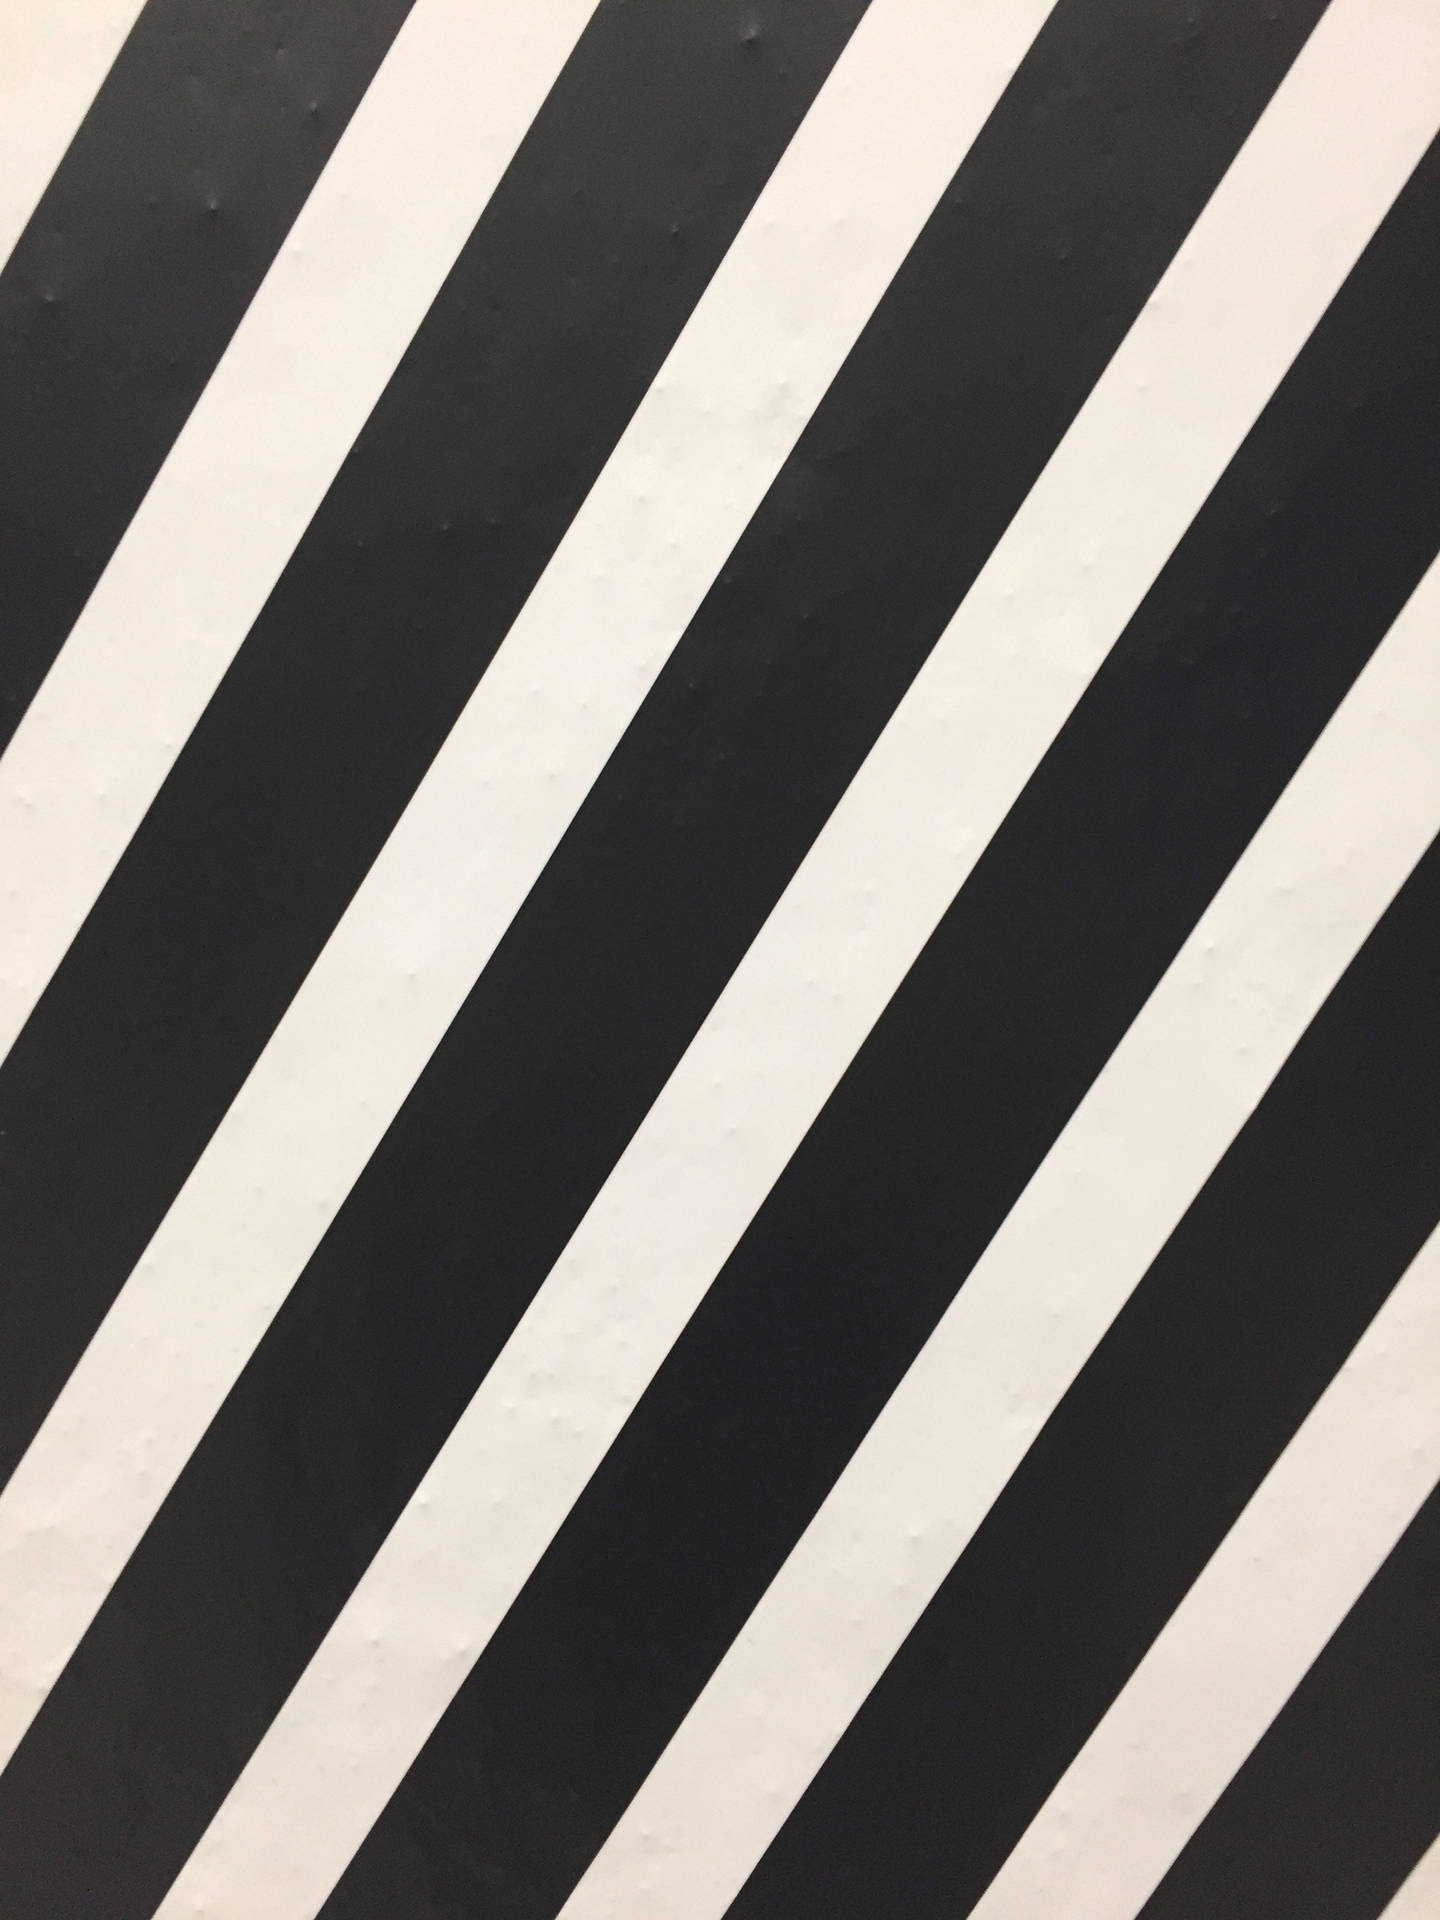 Black And White Zebra Stripes Background